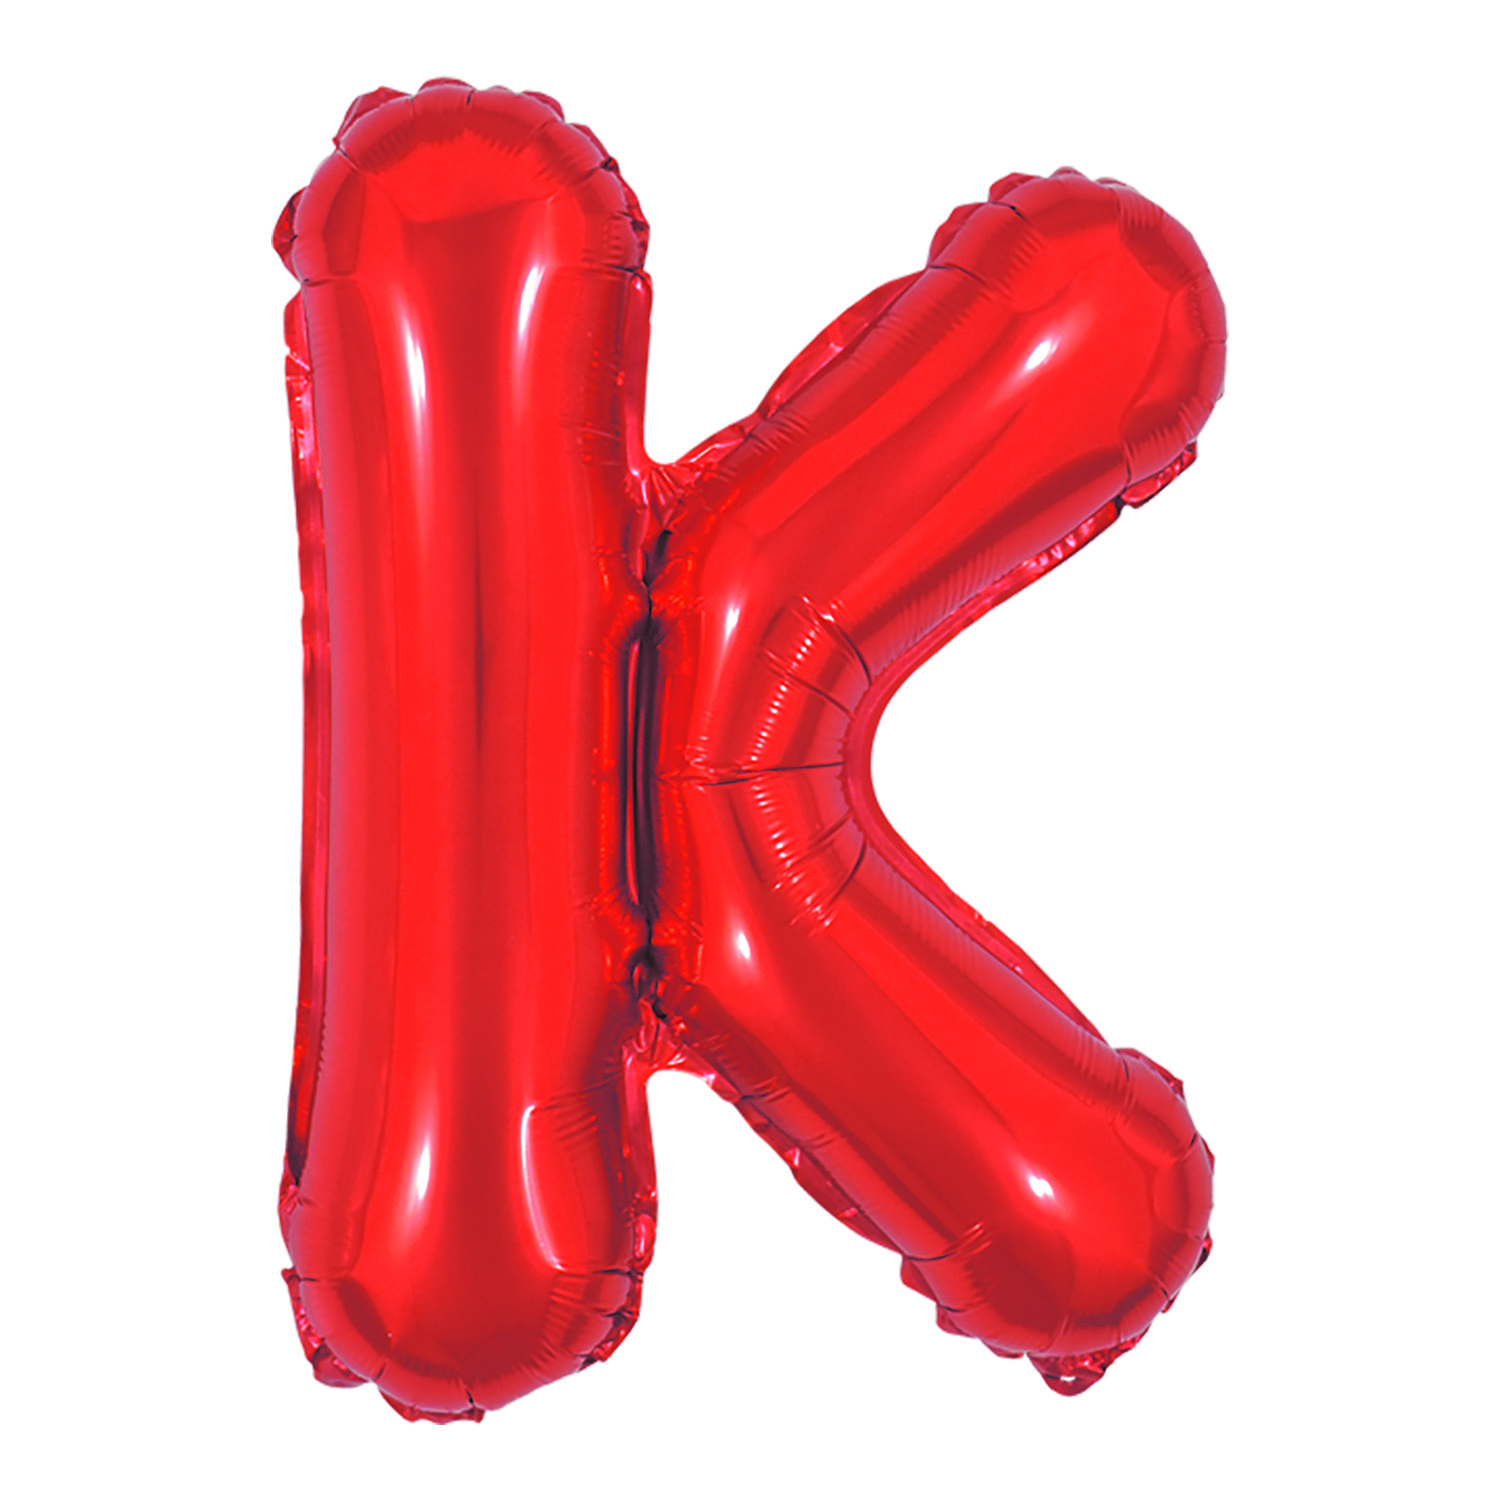 K vermelho 16 